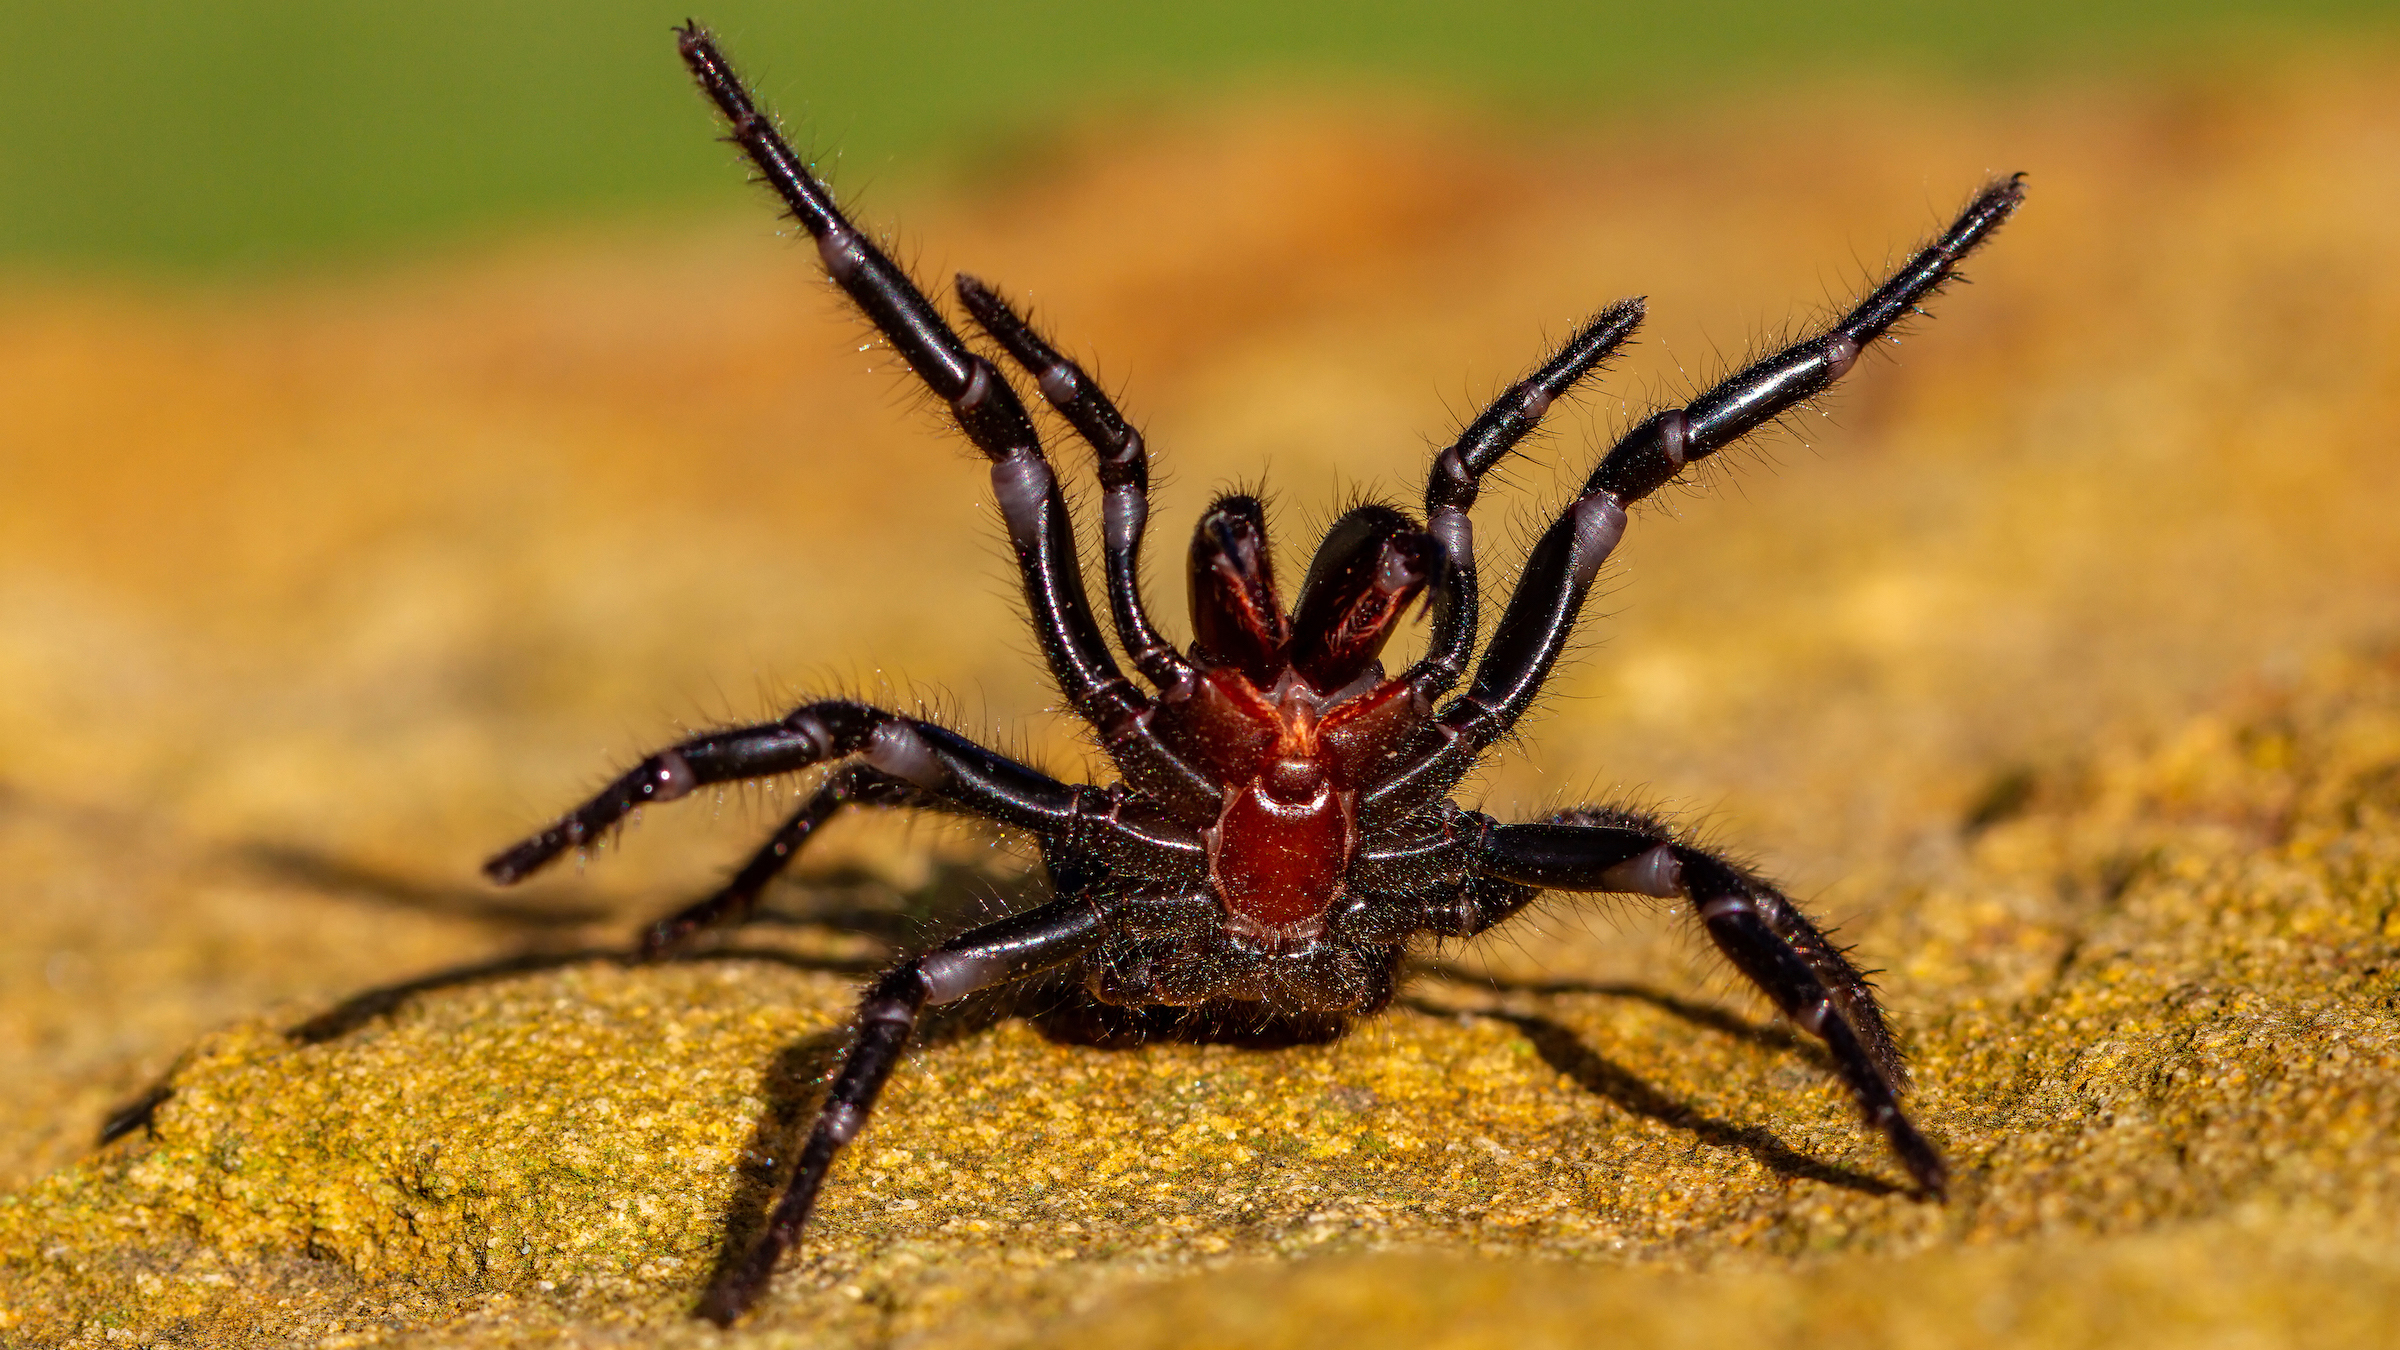 The most Dangerous Spider bites, Spider